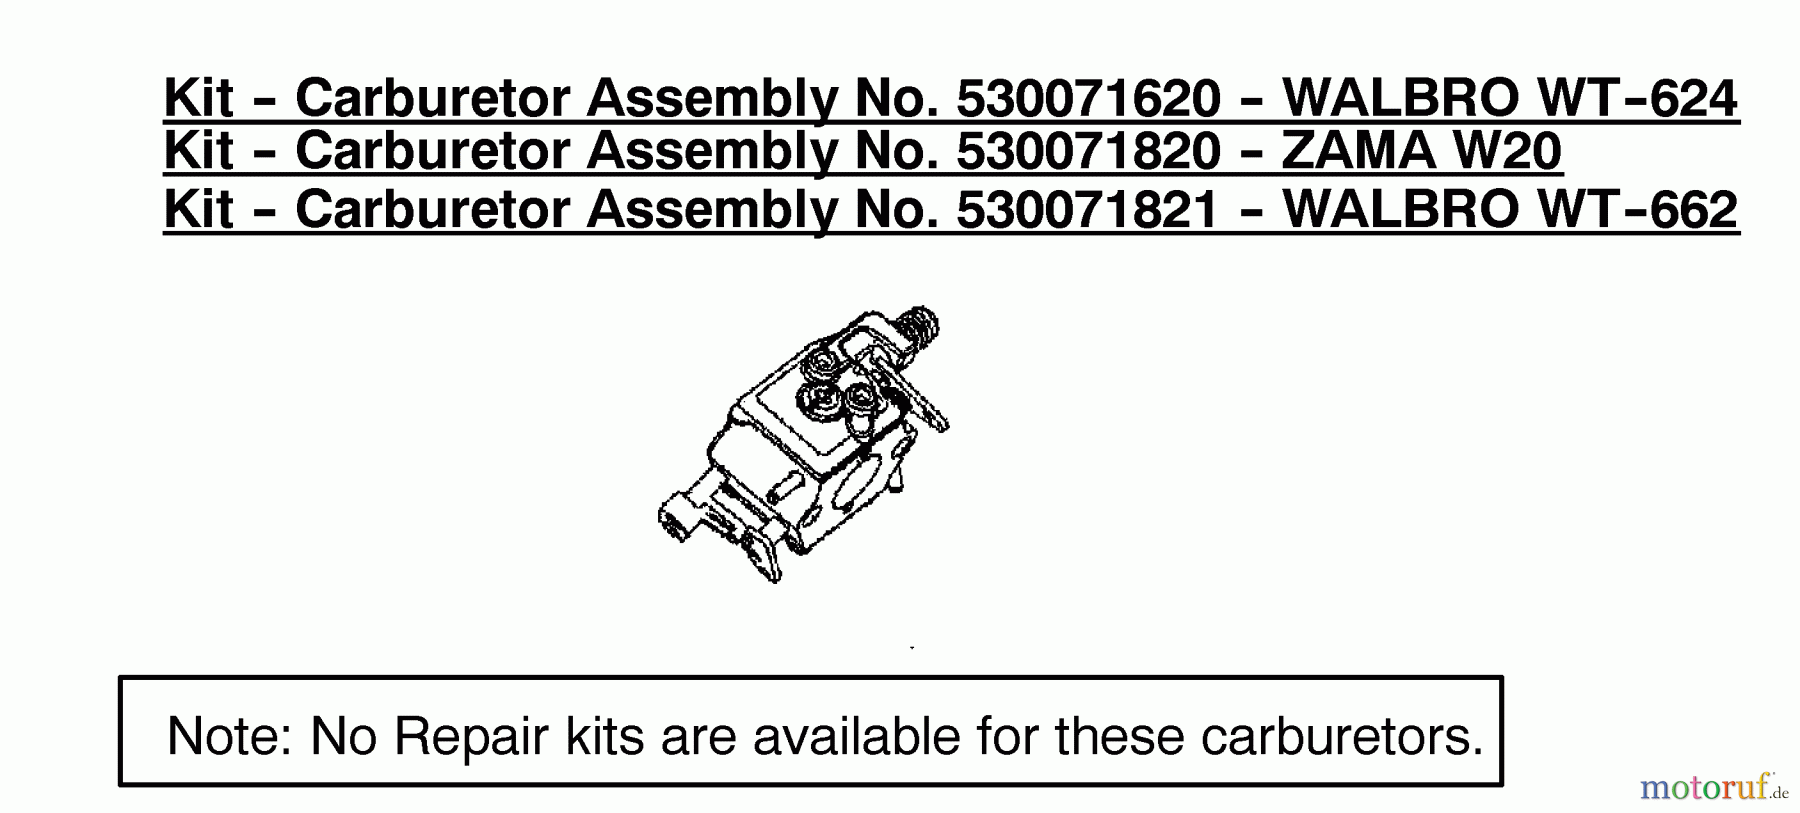  Poulan / Weed Eater Motorsägen 2055 (Type 1) - Poulan Woodsman Chainsaw Kit - Carburetor Assembly 530071820/530071821/530071620